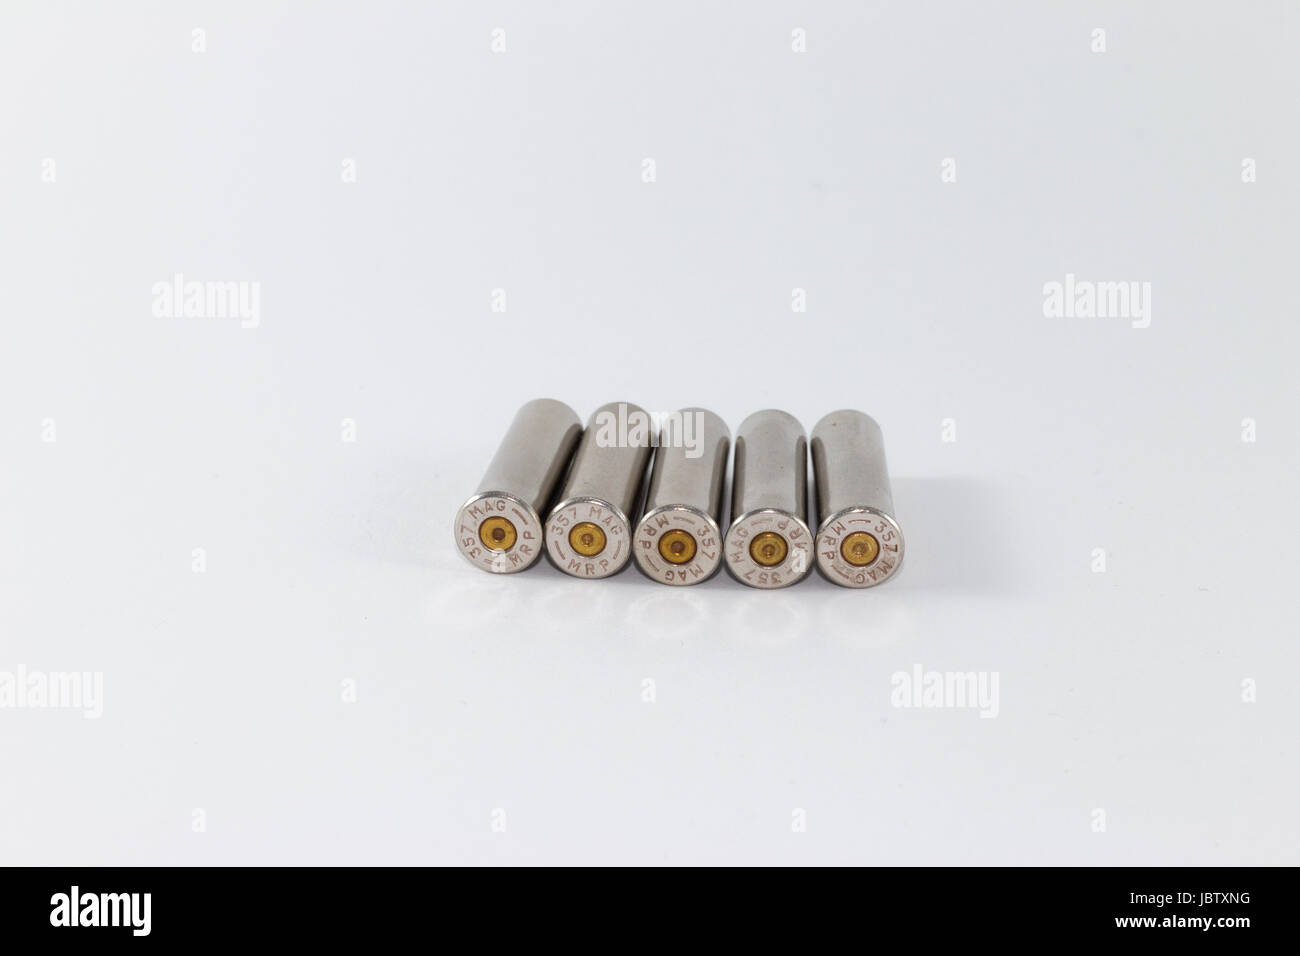 five cartridges,caliber .357 magnum,fired Stock Photo